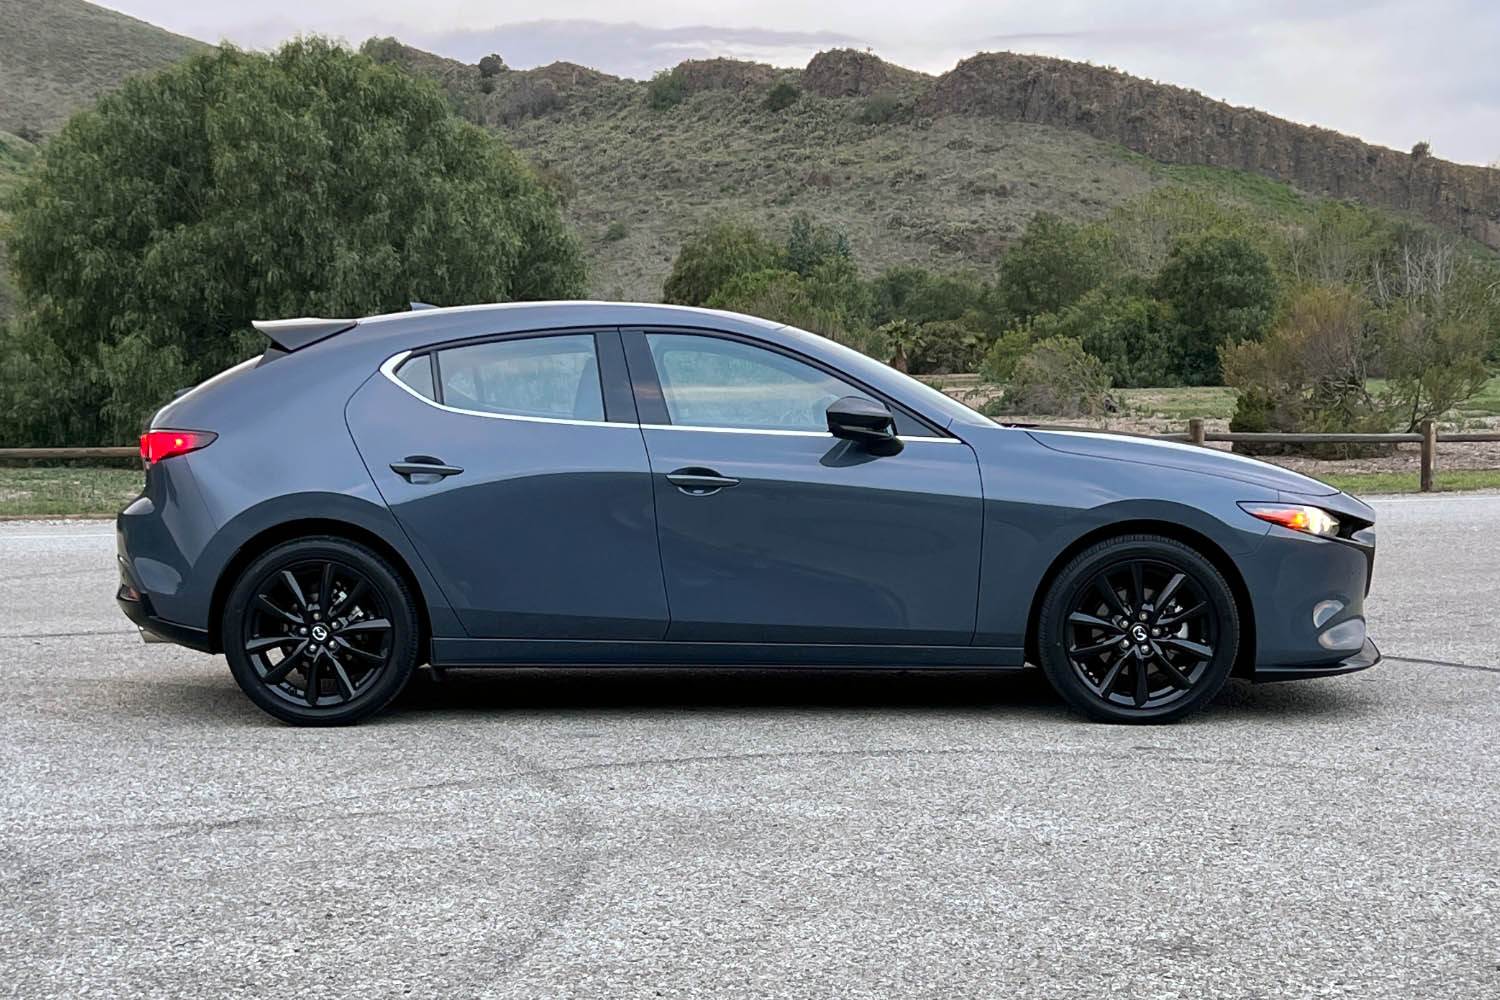 2022 Mazda 3 2.5 Turbo Hatchback Polymetal Gray Side View